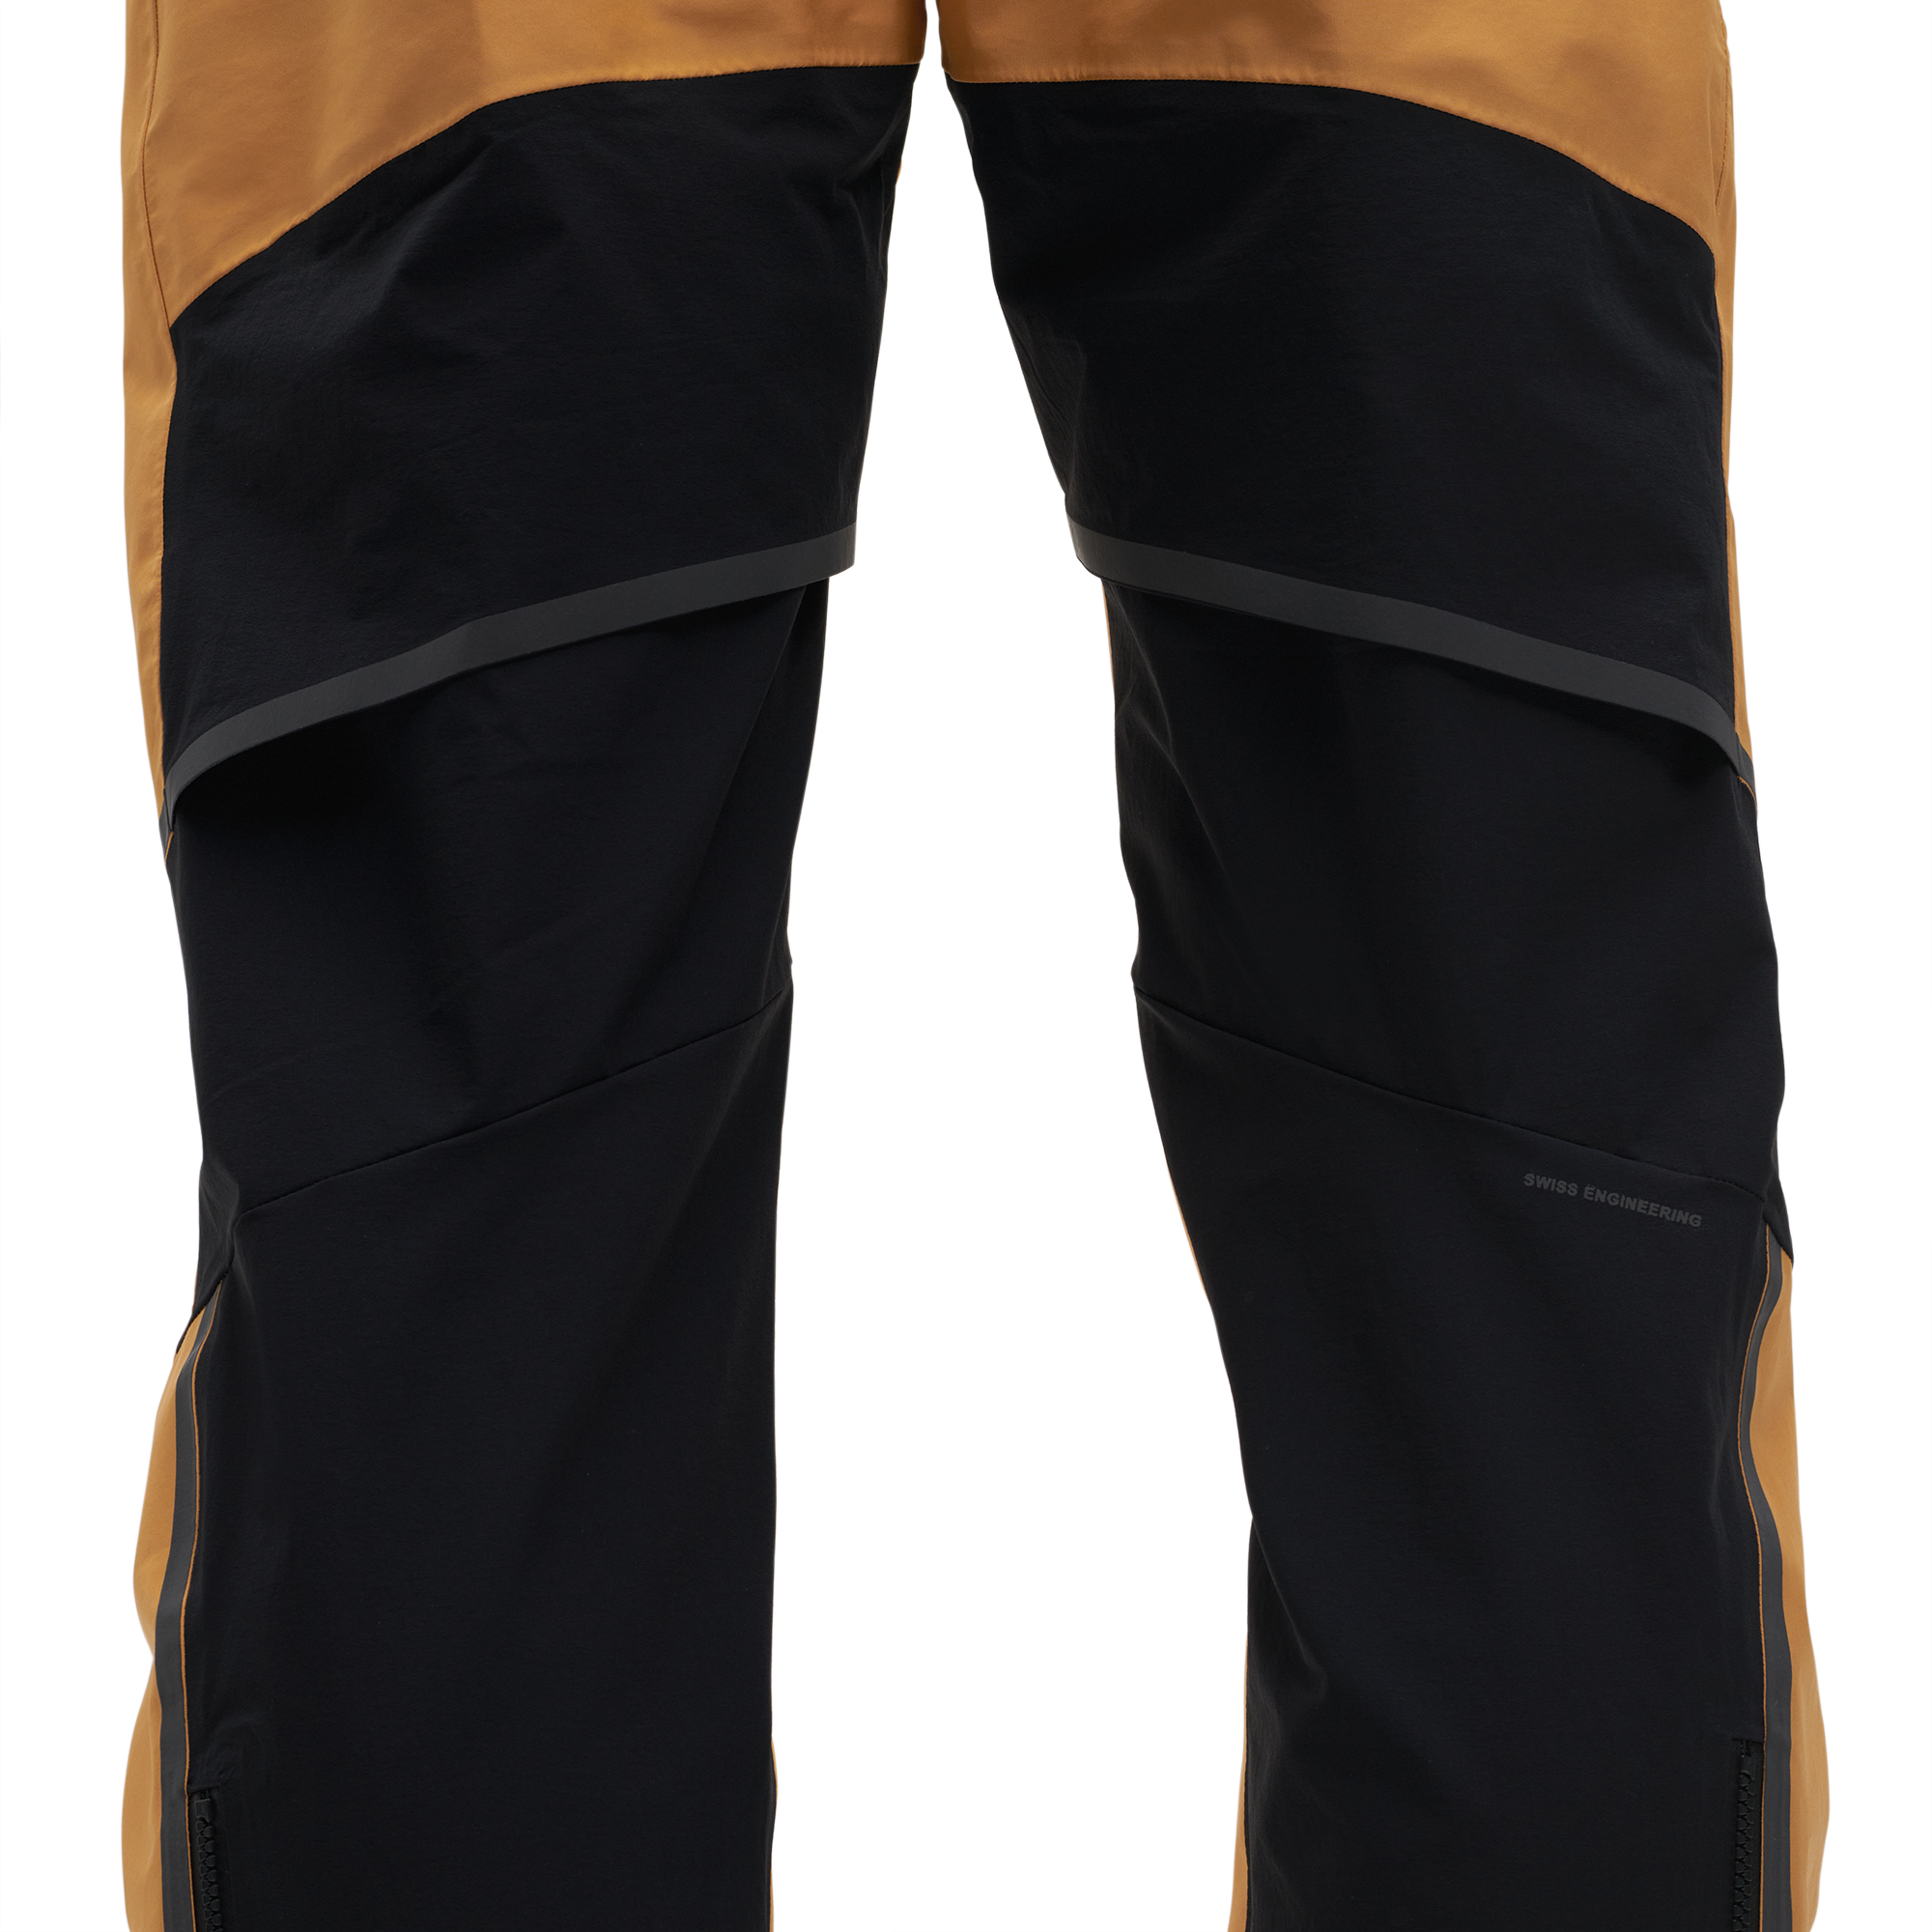 Storm Guide Men's LG/XL Realtree Edge Pants 